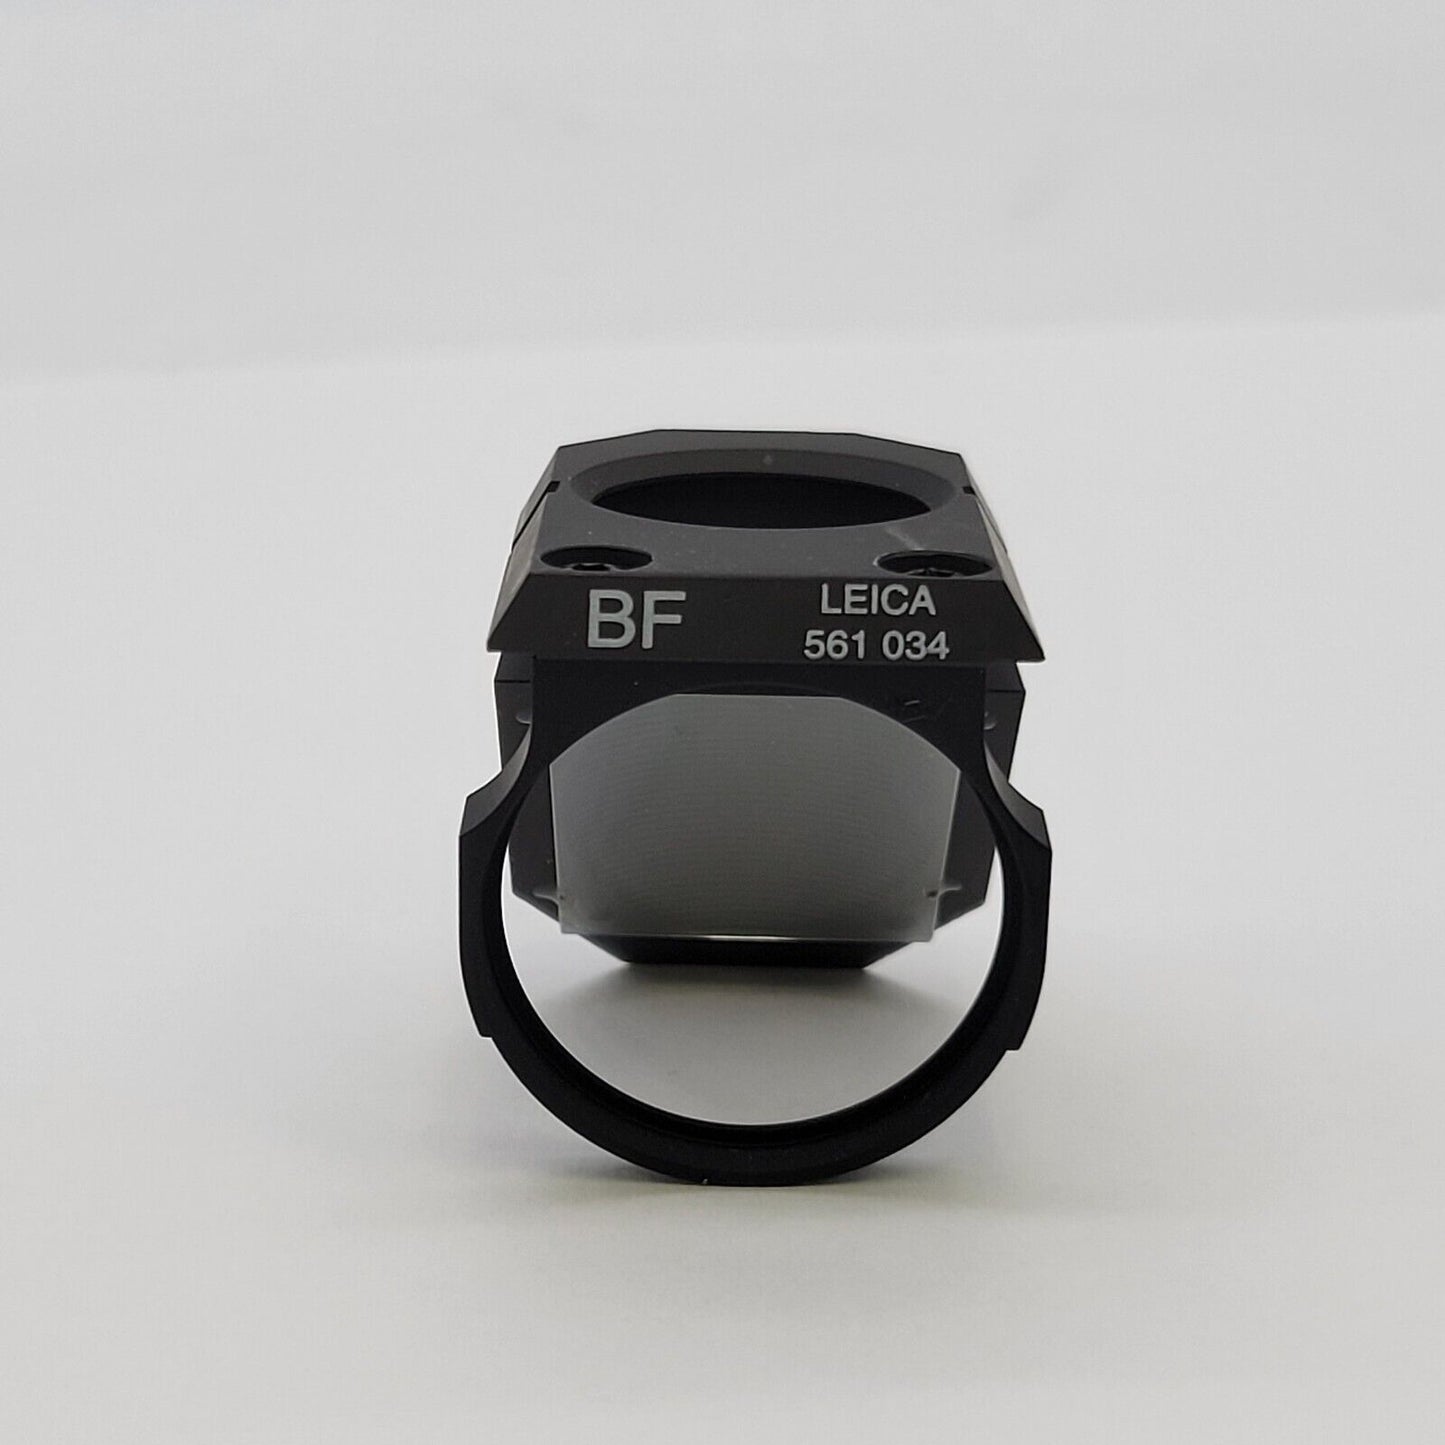 Leica Microscope BF Brightfield Filter Cube 561034 for Fluorescence Turret DM - microscopemarketplace